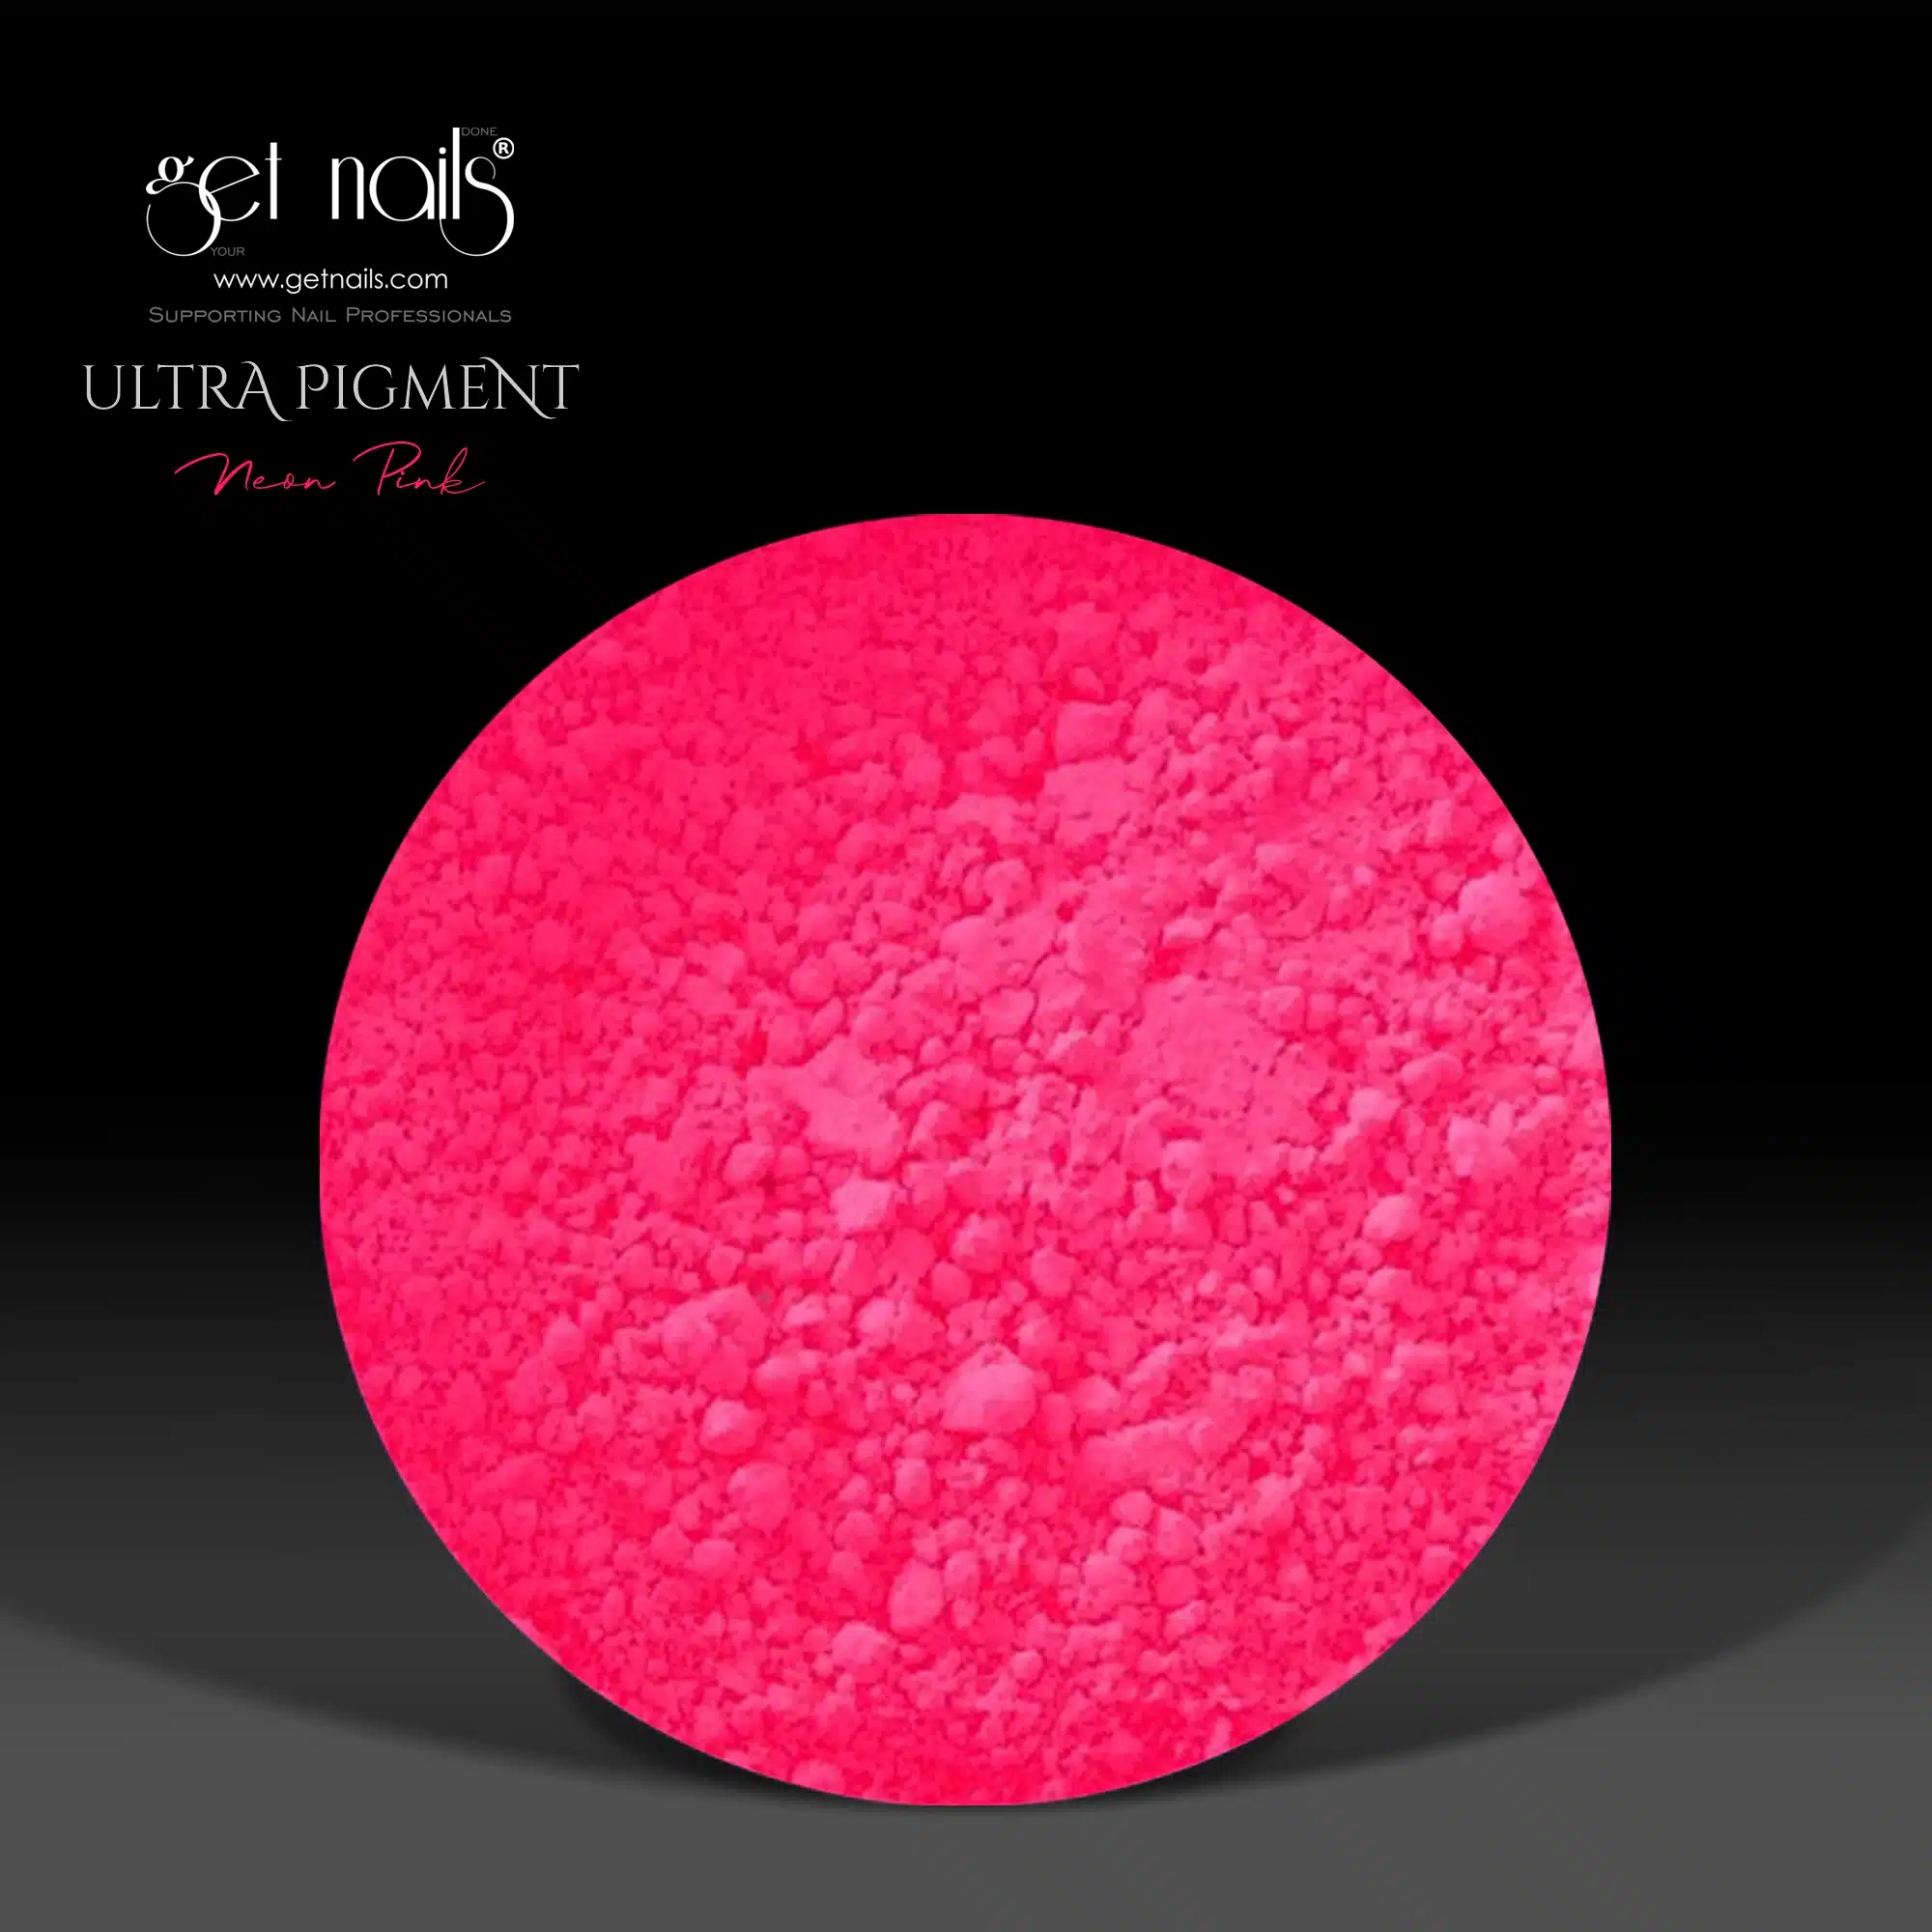 Get Nails Austria - Ultra Pigment Neon Pink 1.5 g